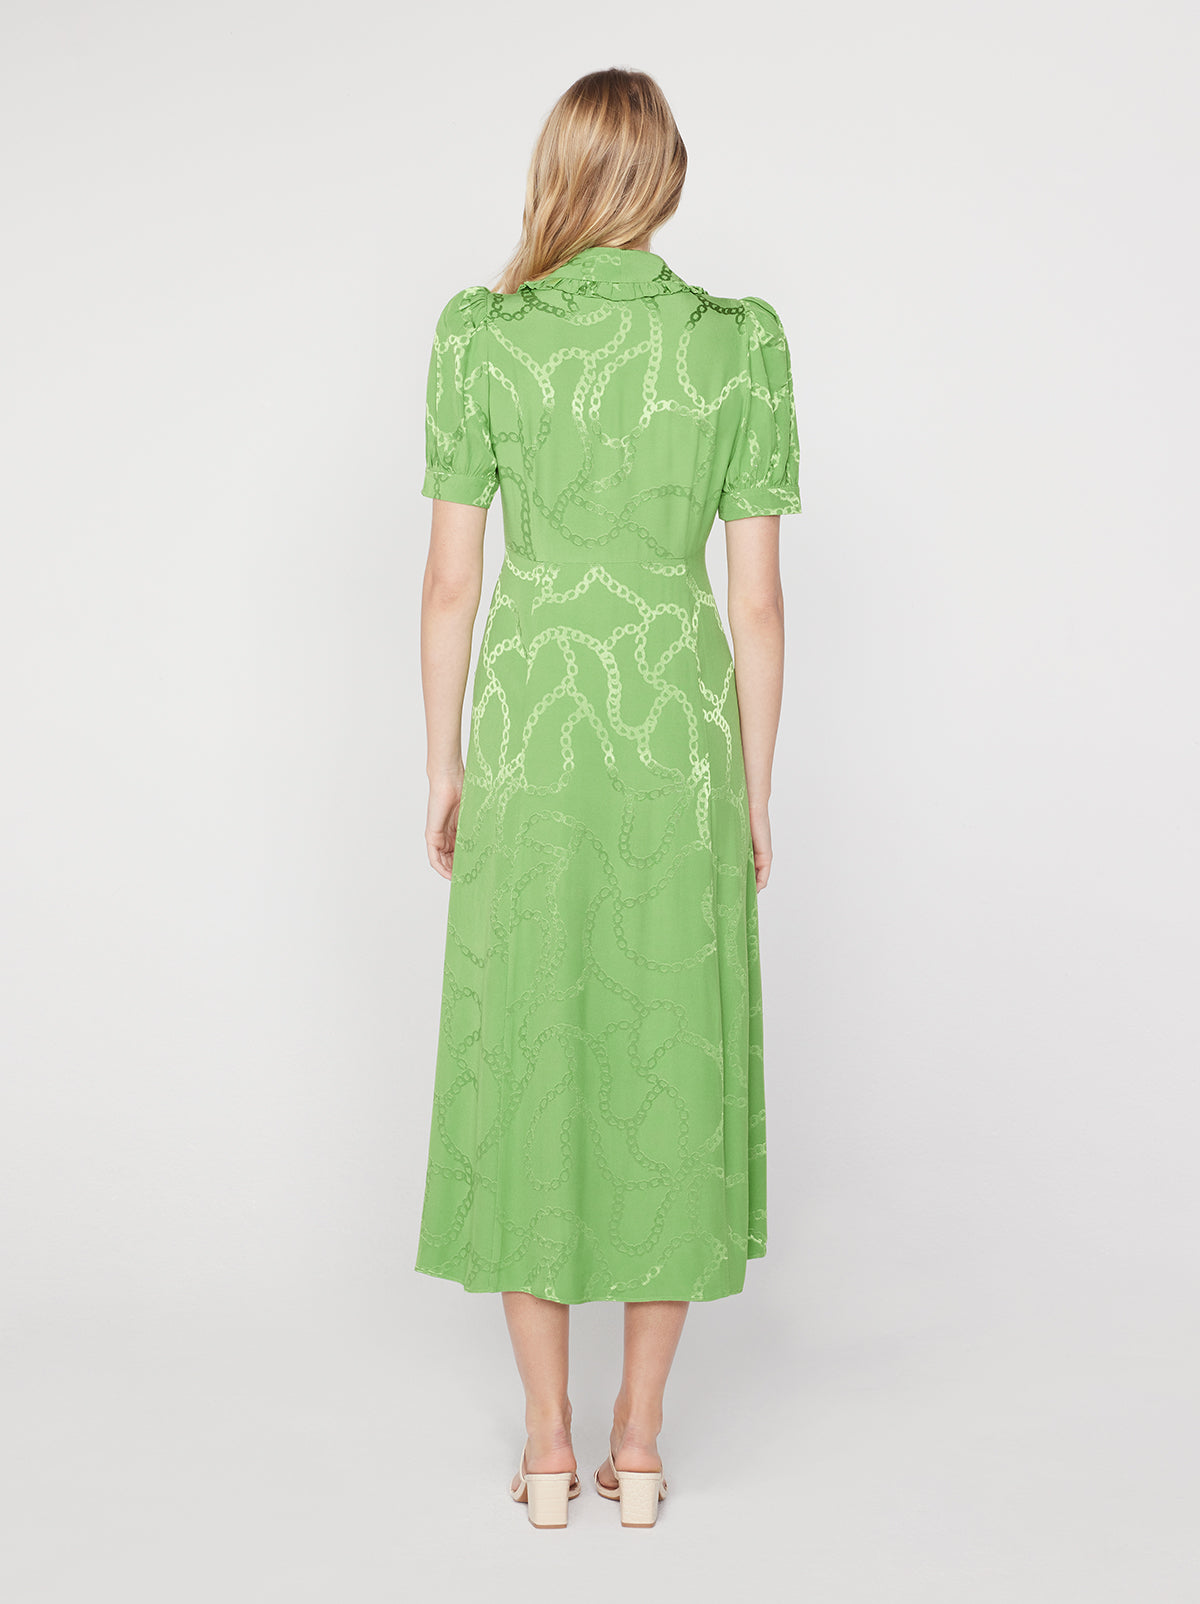 Bethany Green Chain Jacquard Tea Dress By KITRI Studio